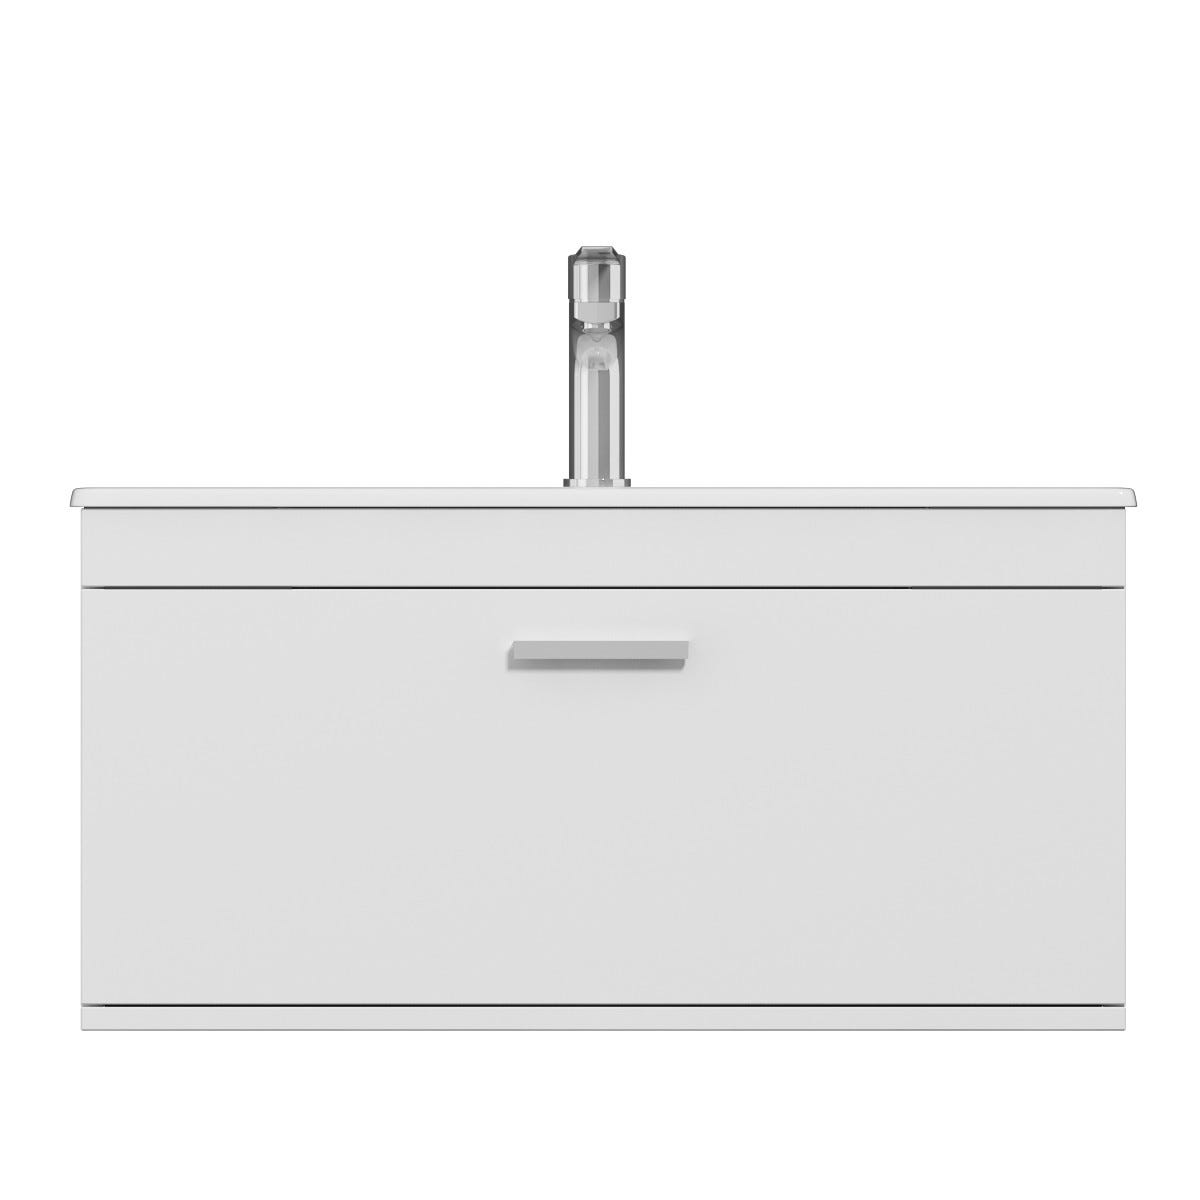 RUBITE Meuble salle de bain simple vasque 1 tiroir blanc largeur 80 cm 4